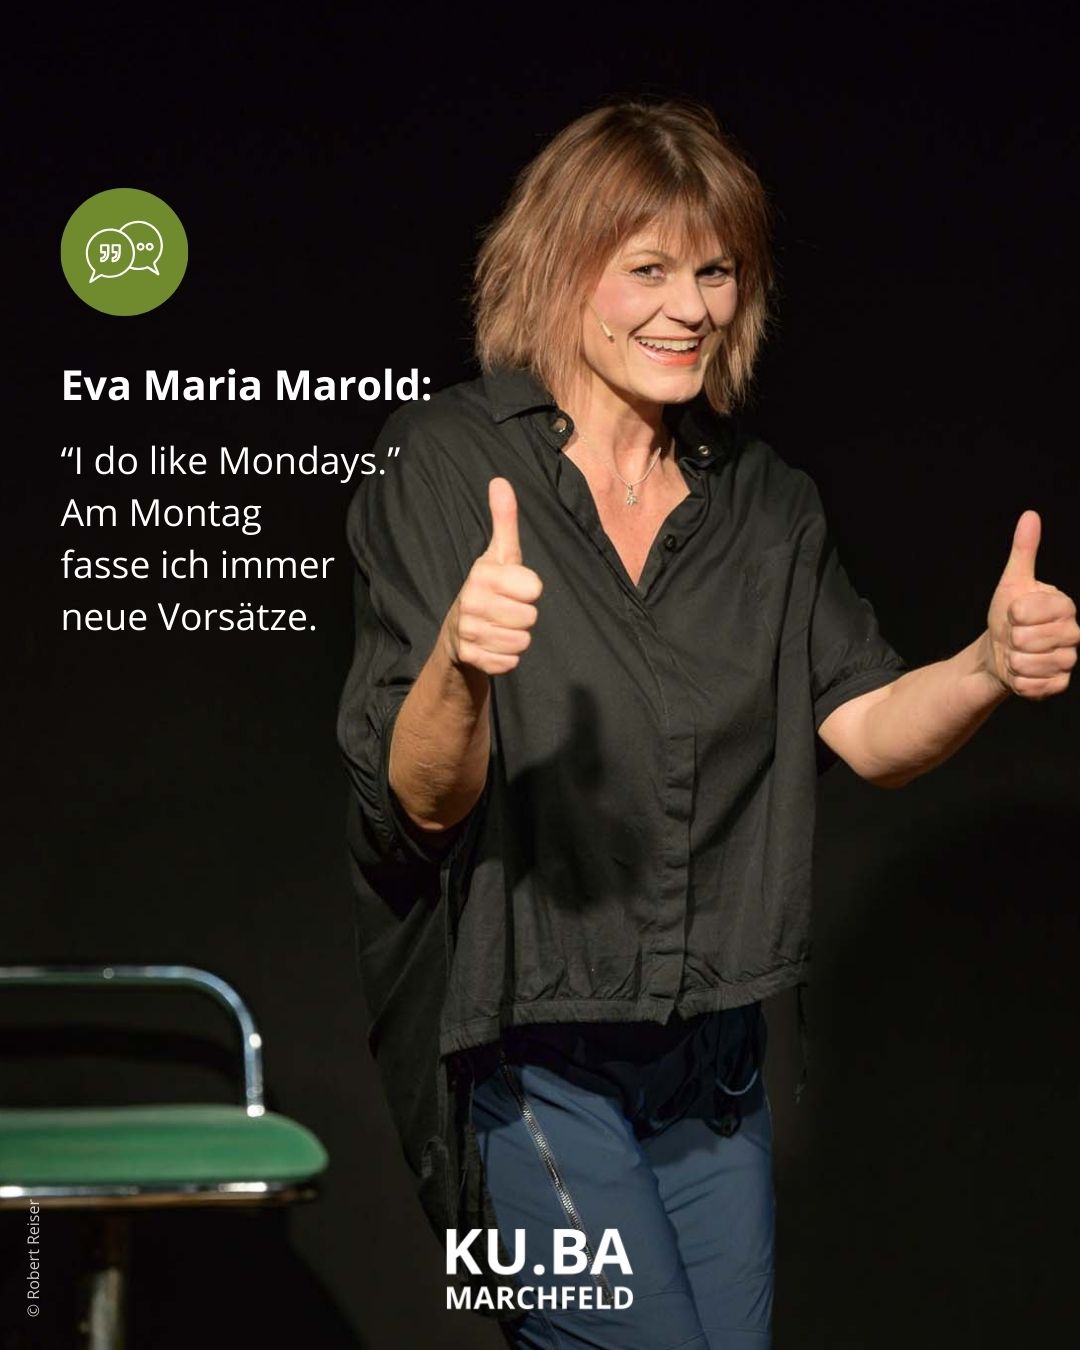 Eva Maria Marold - Radikal Inkonsequent in Groß-Enzersdorf